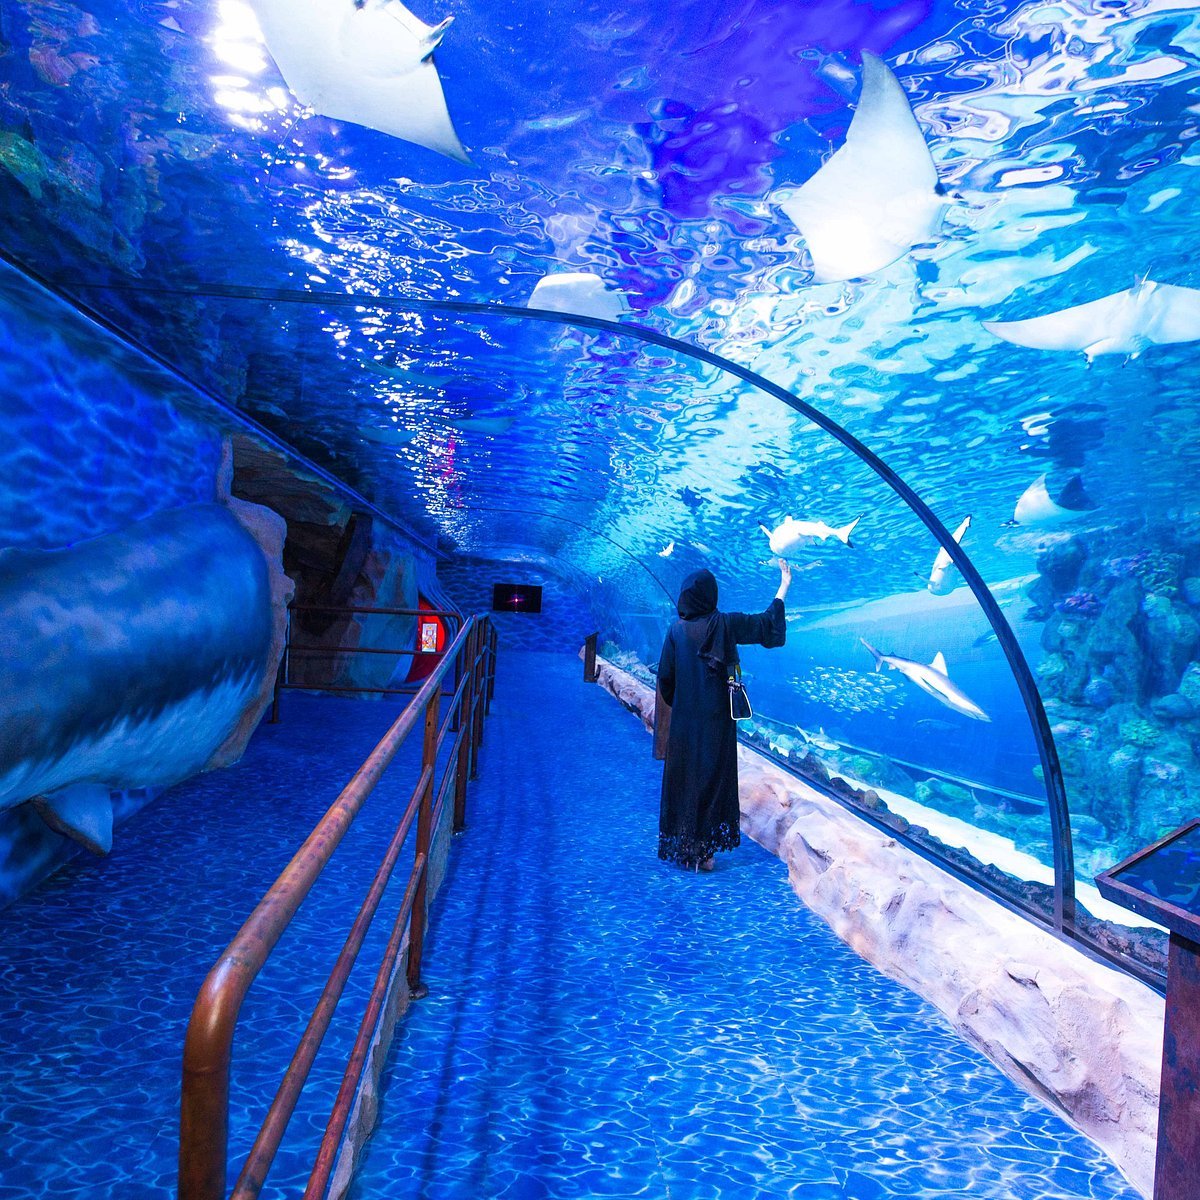 Combo : Dubai Aquarium + Laguna Waterpark Tickets